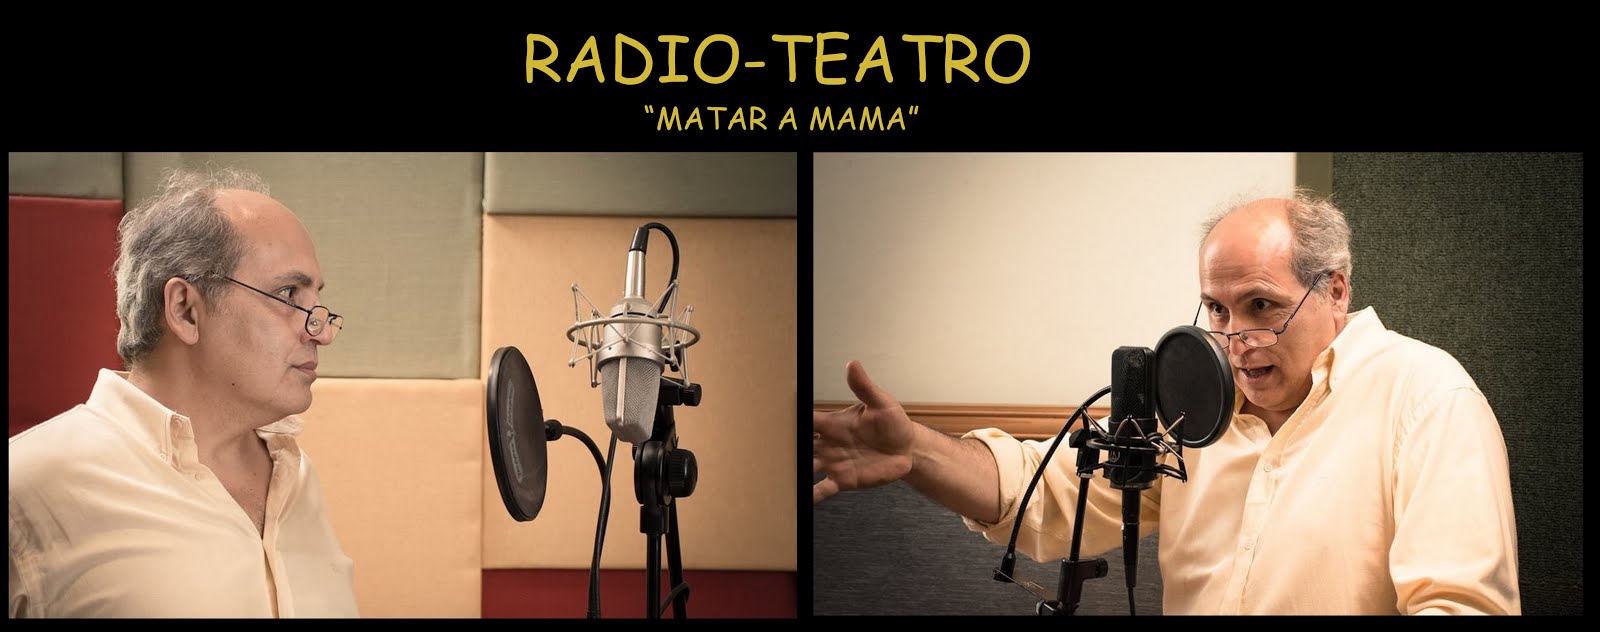 Radio Teatro // "Matar a mama" 2016